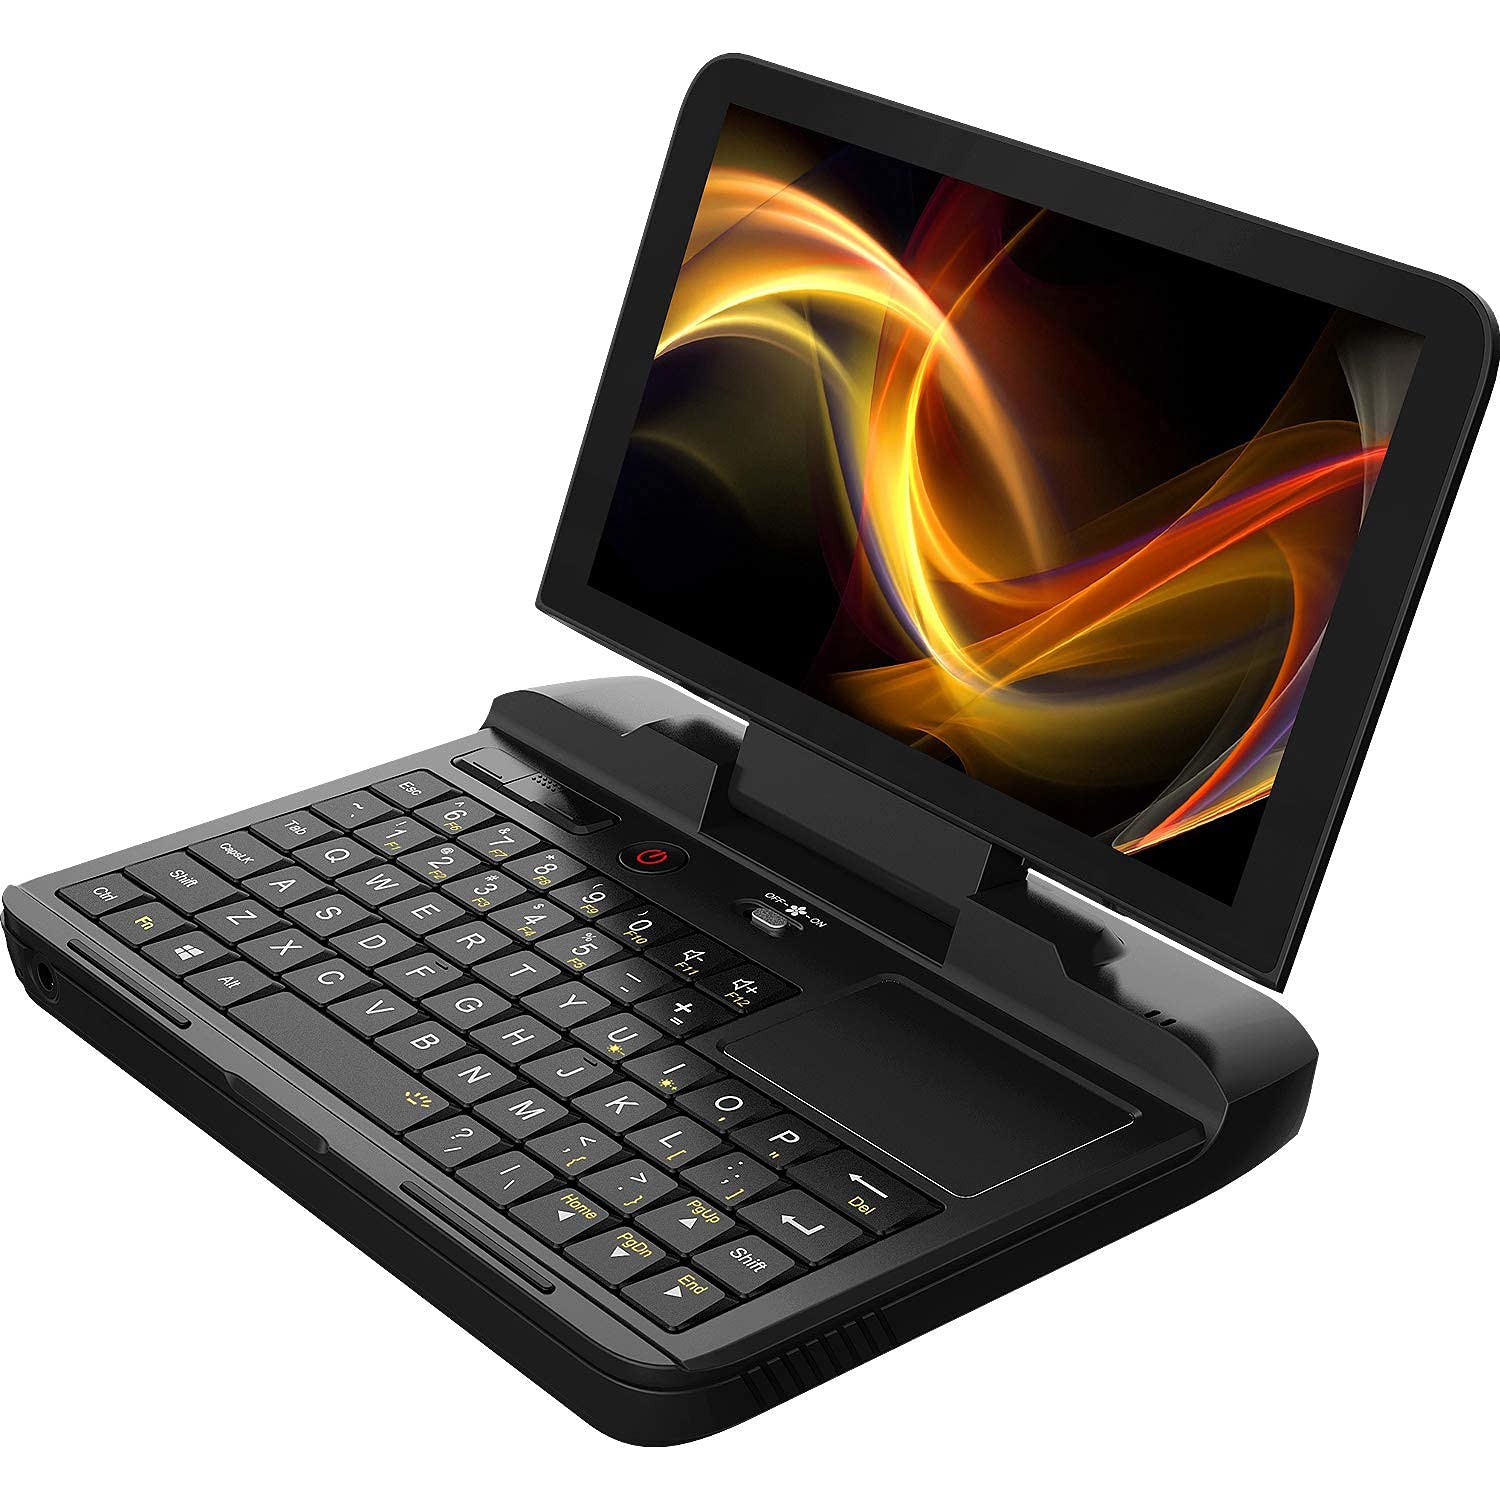 [1TB M.2 SSD Version] GPD Micro PC- 6 Inches Handheld Industry Laptop Mini PC Win 10 Pro,Pocket Mini Portable PC Computer Notebook,8GB RAM